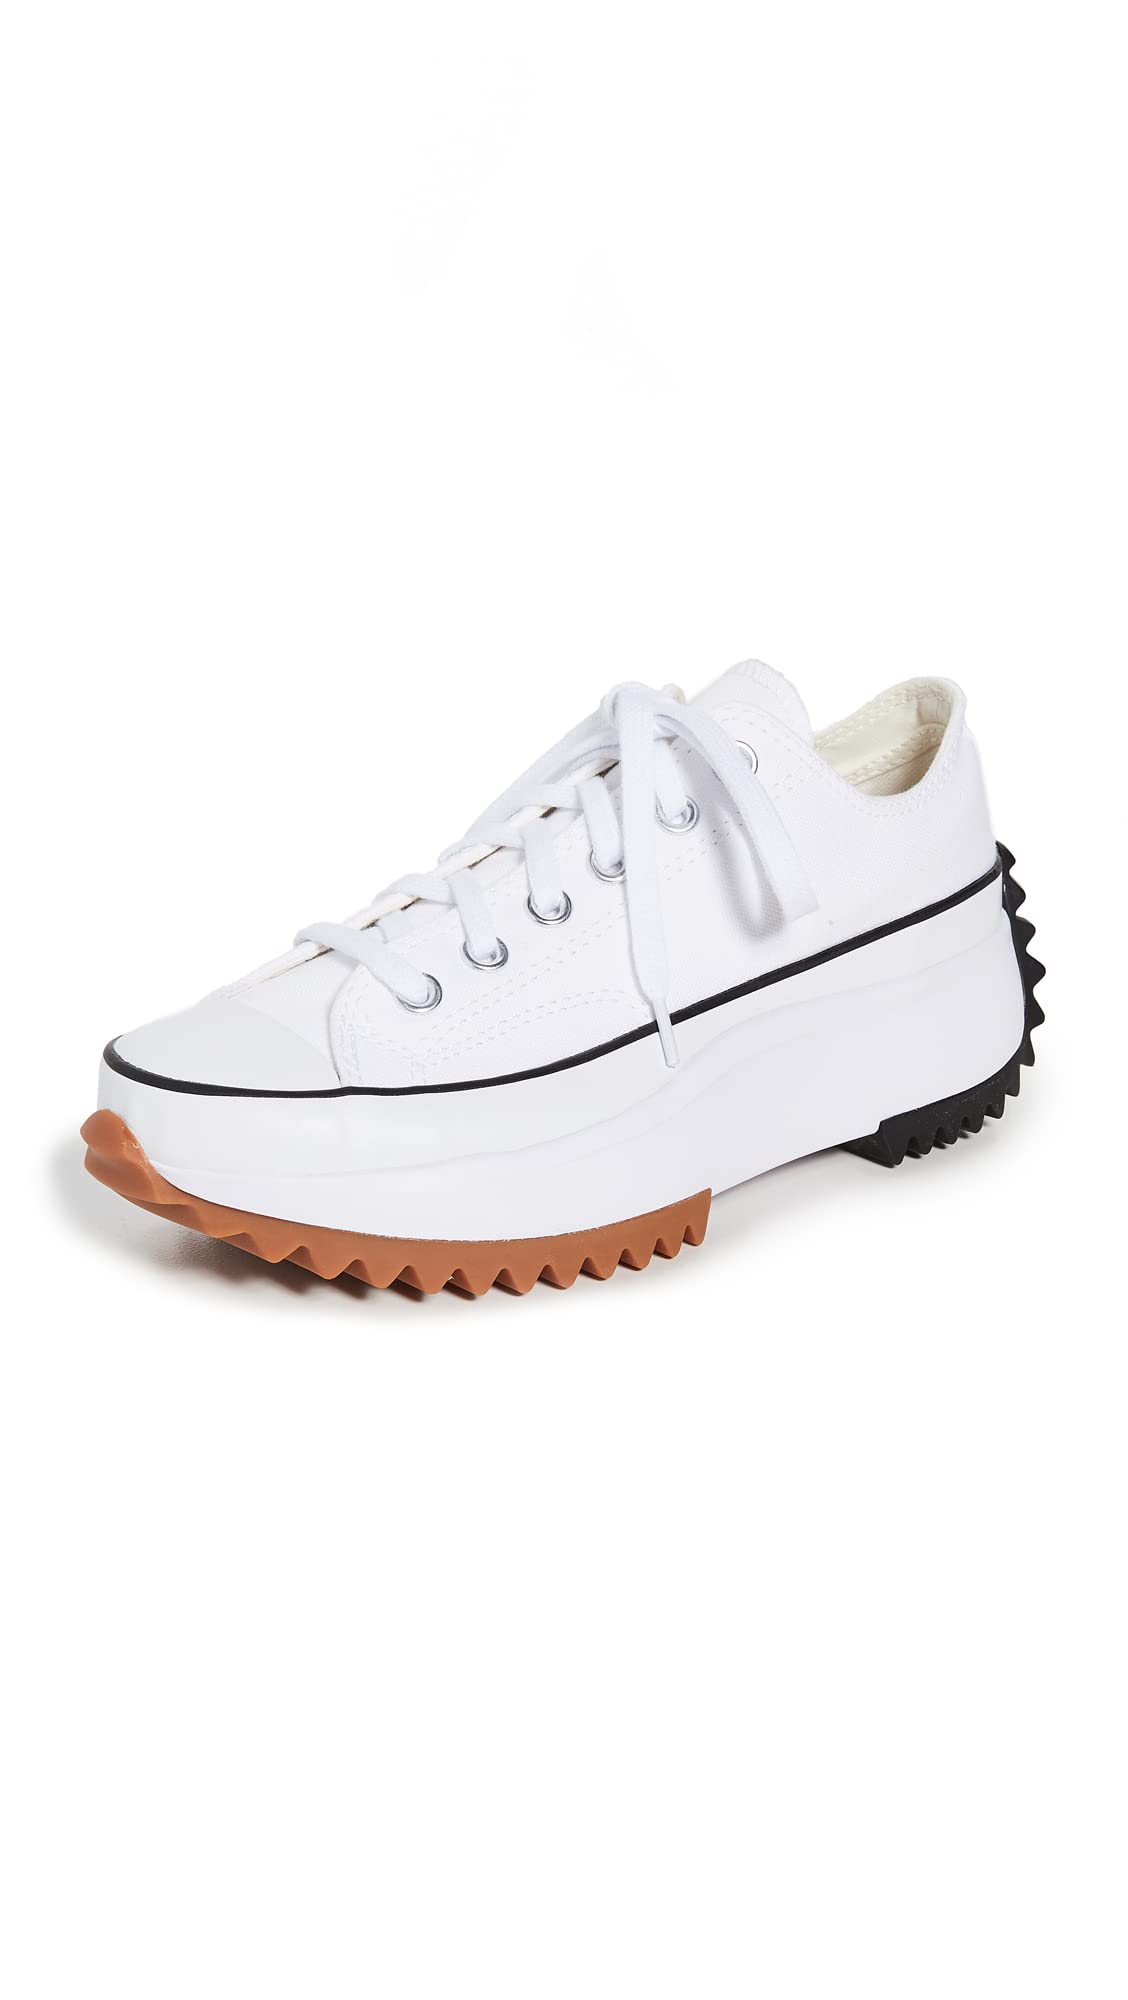 Converse Women's Run Star Hike Platform Sneakers, White/Black/Gum, 7.5 Medium US